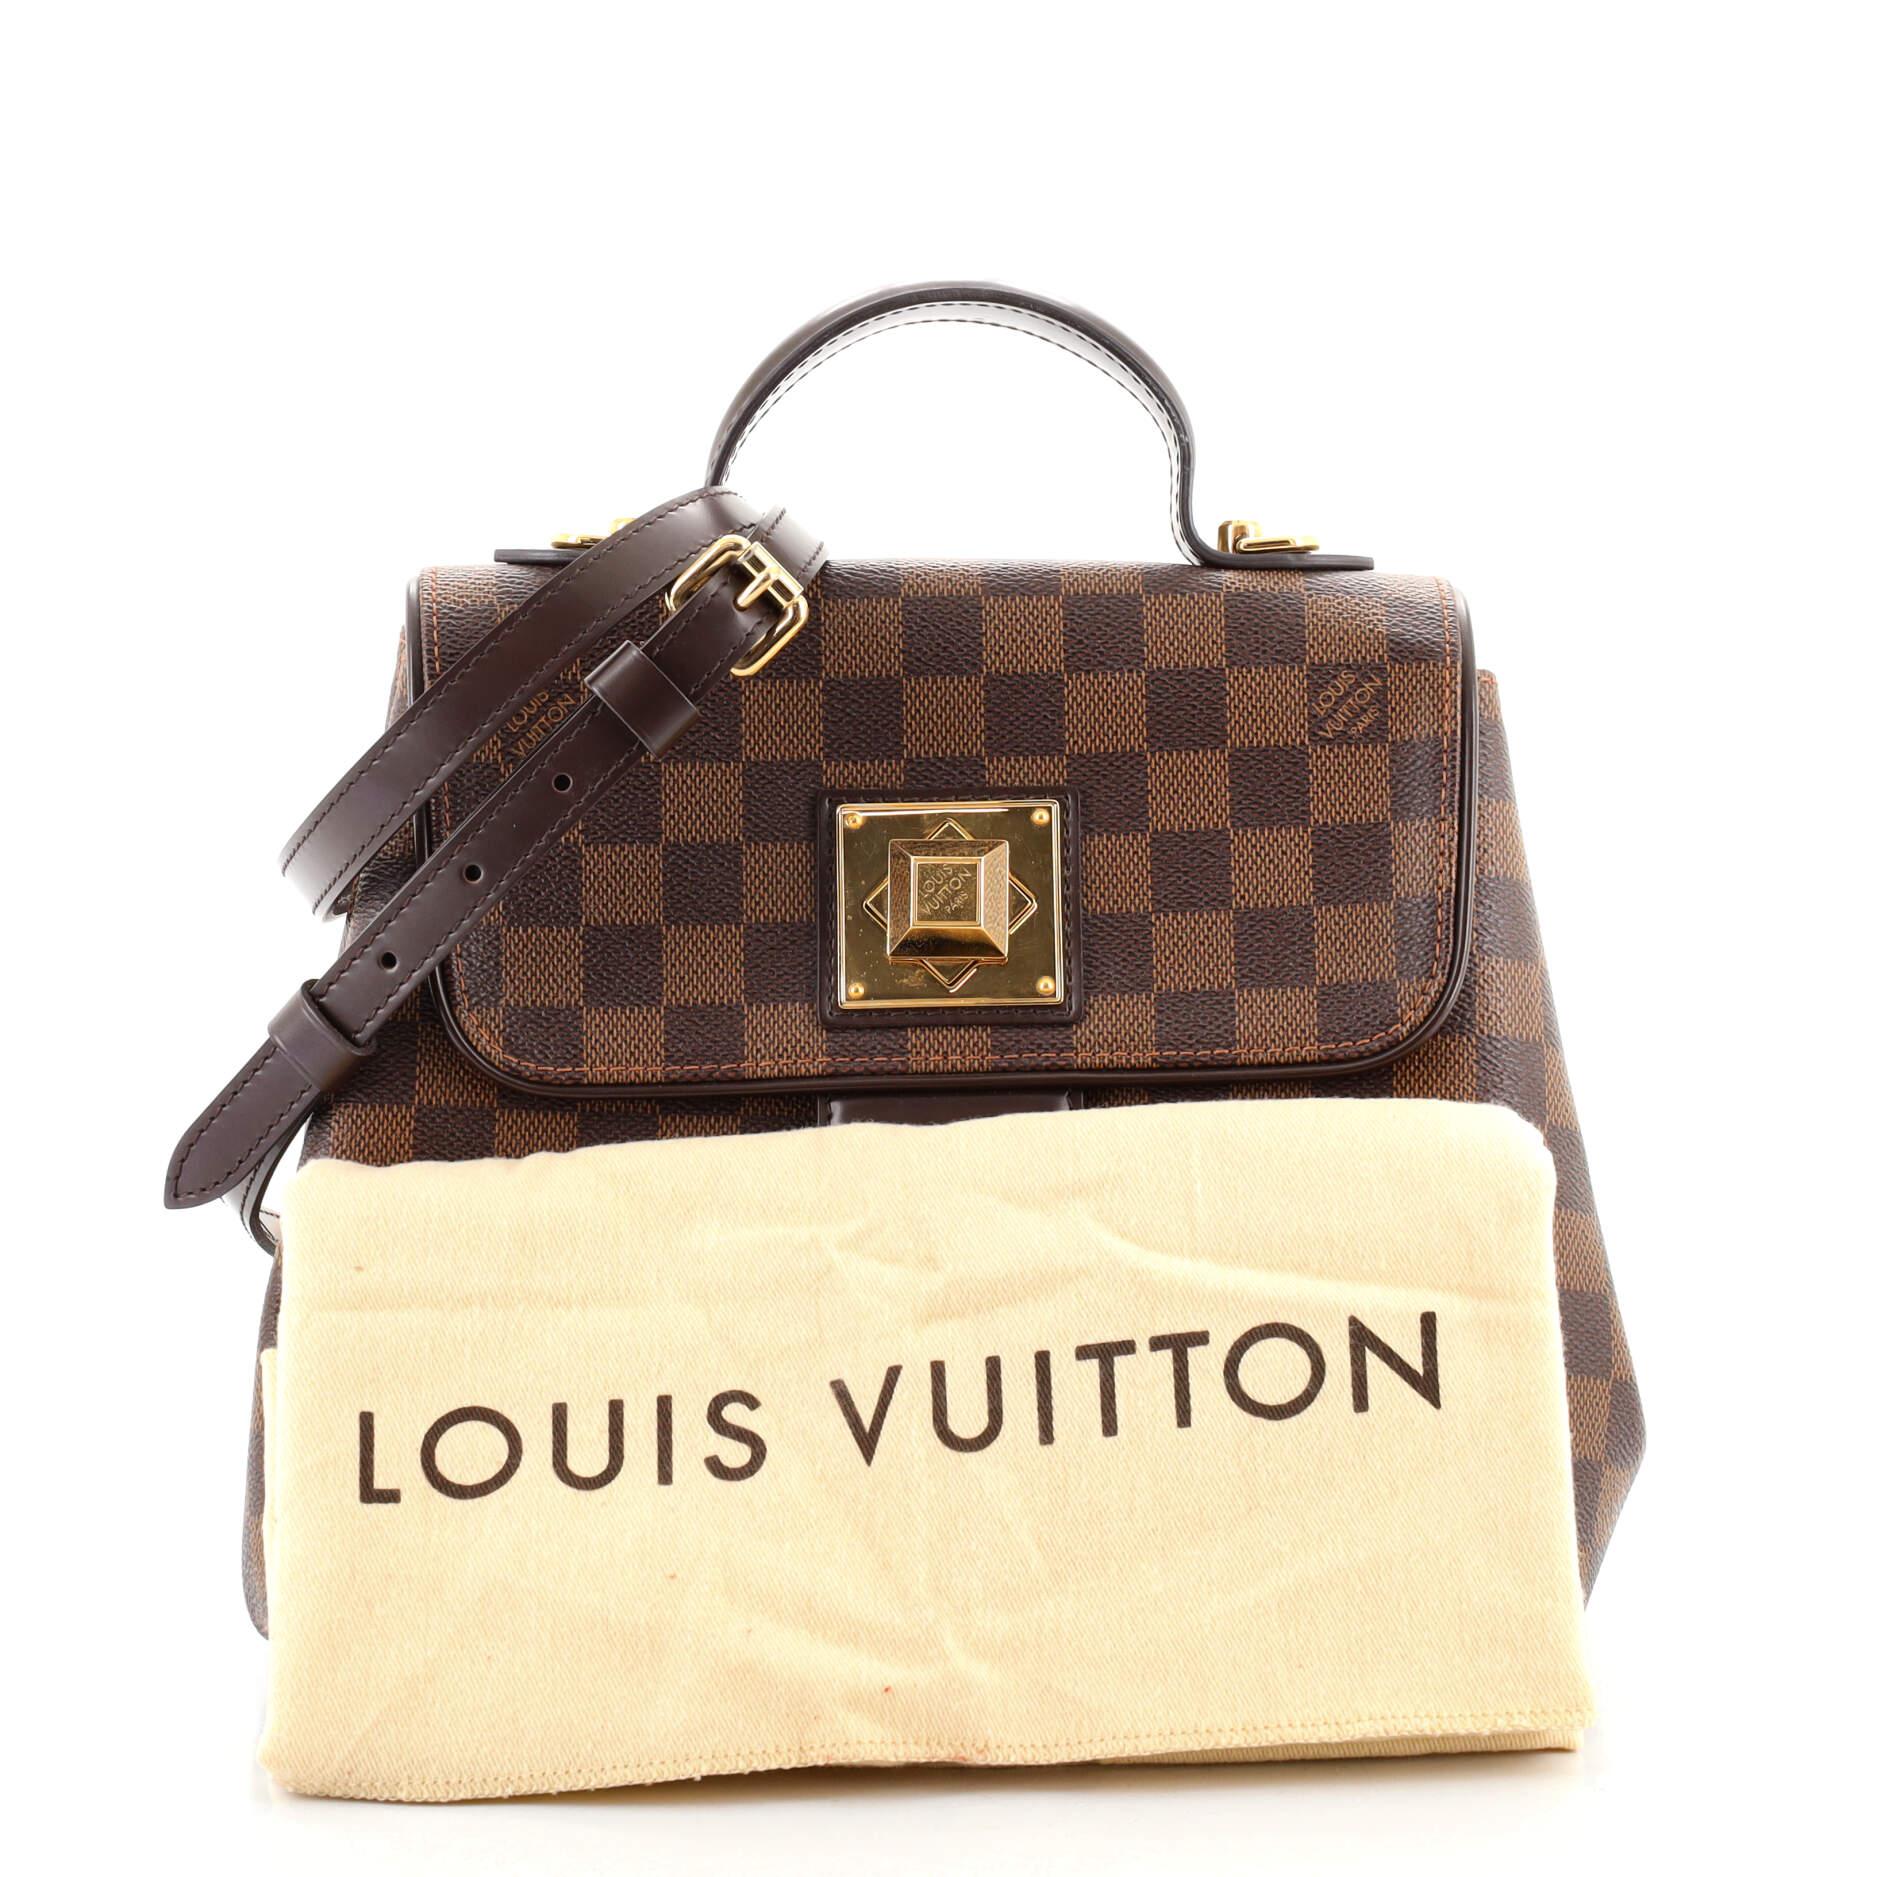 Louis Vuitton Bergamo - For Sale on 1stDibs  lv bergamo mm, lv bergamo pm, bergamo  louis vuitton